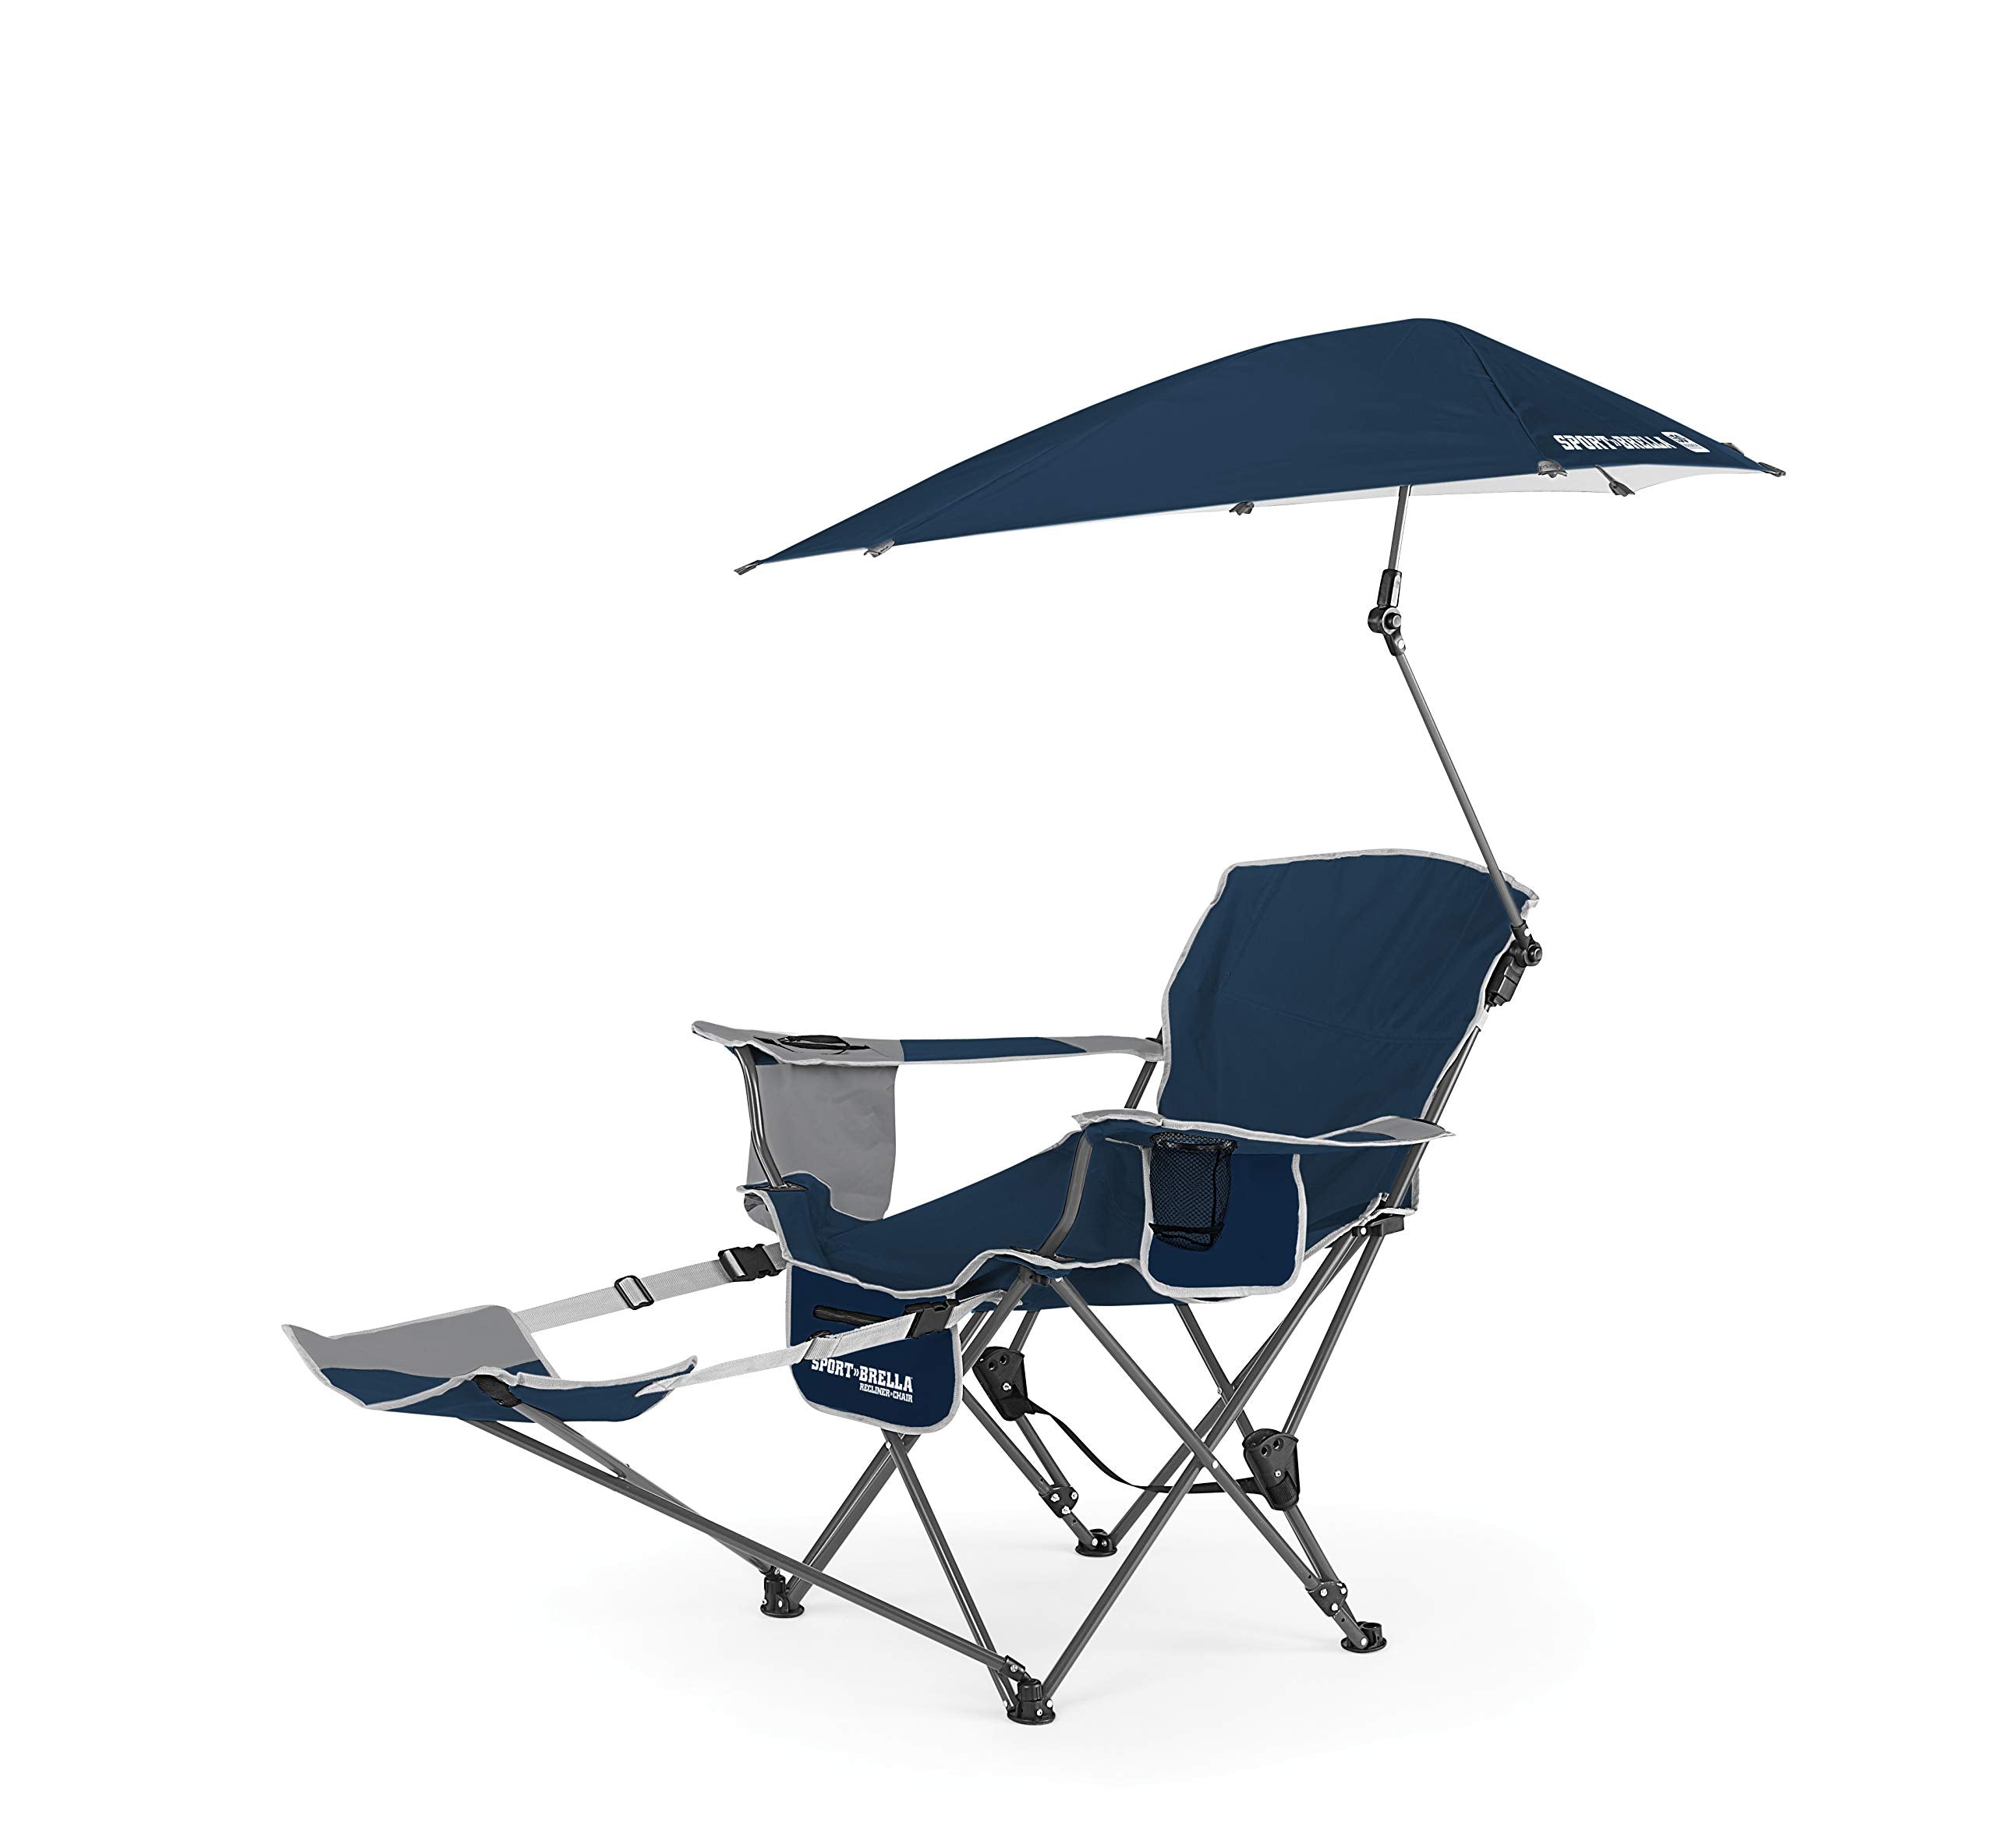 Sport-Brella Reclining Beach Chair (Midnight Blue) - 3-Position Adjustability, Detachable Footrest - 3-Way Swiveling UPF 50+ Umbrella - Insulated Drink Pocket, Cup Holder, Zippered Storage & Carry Bag